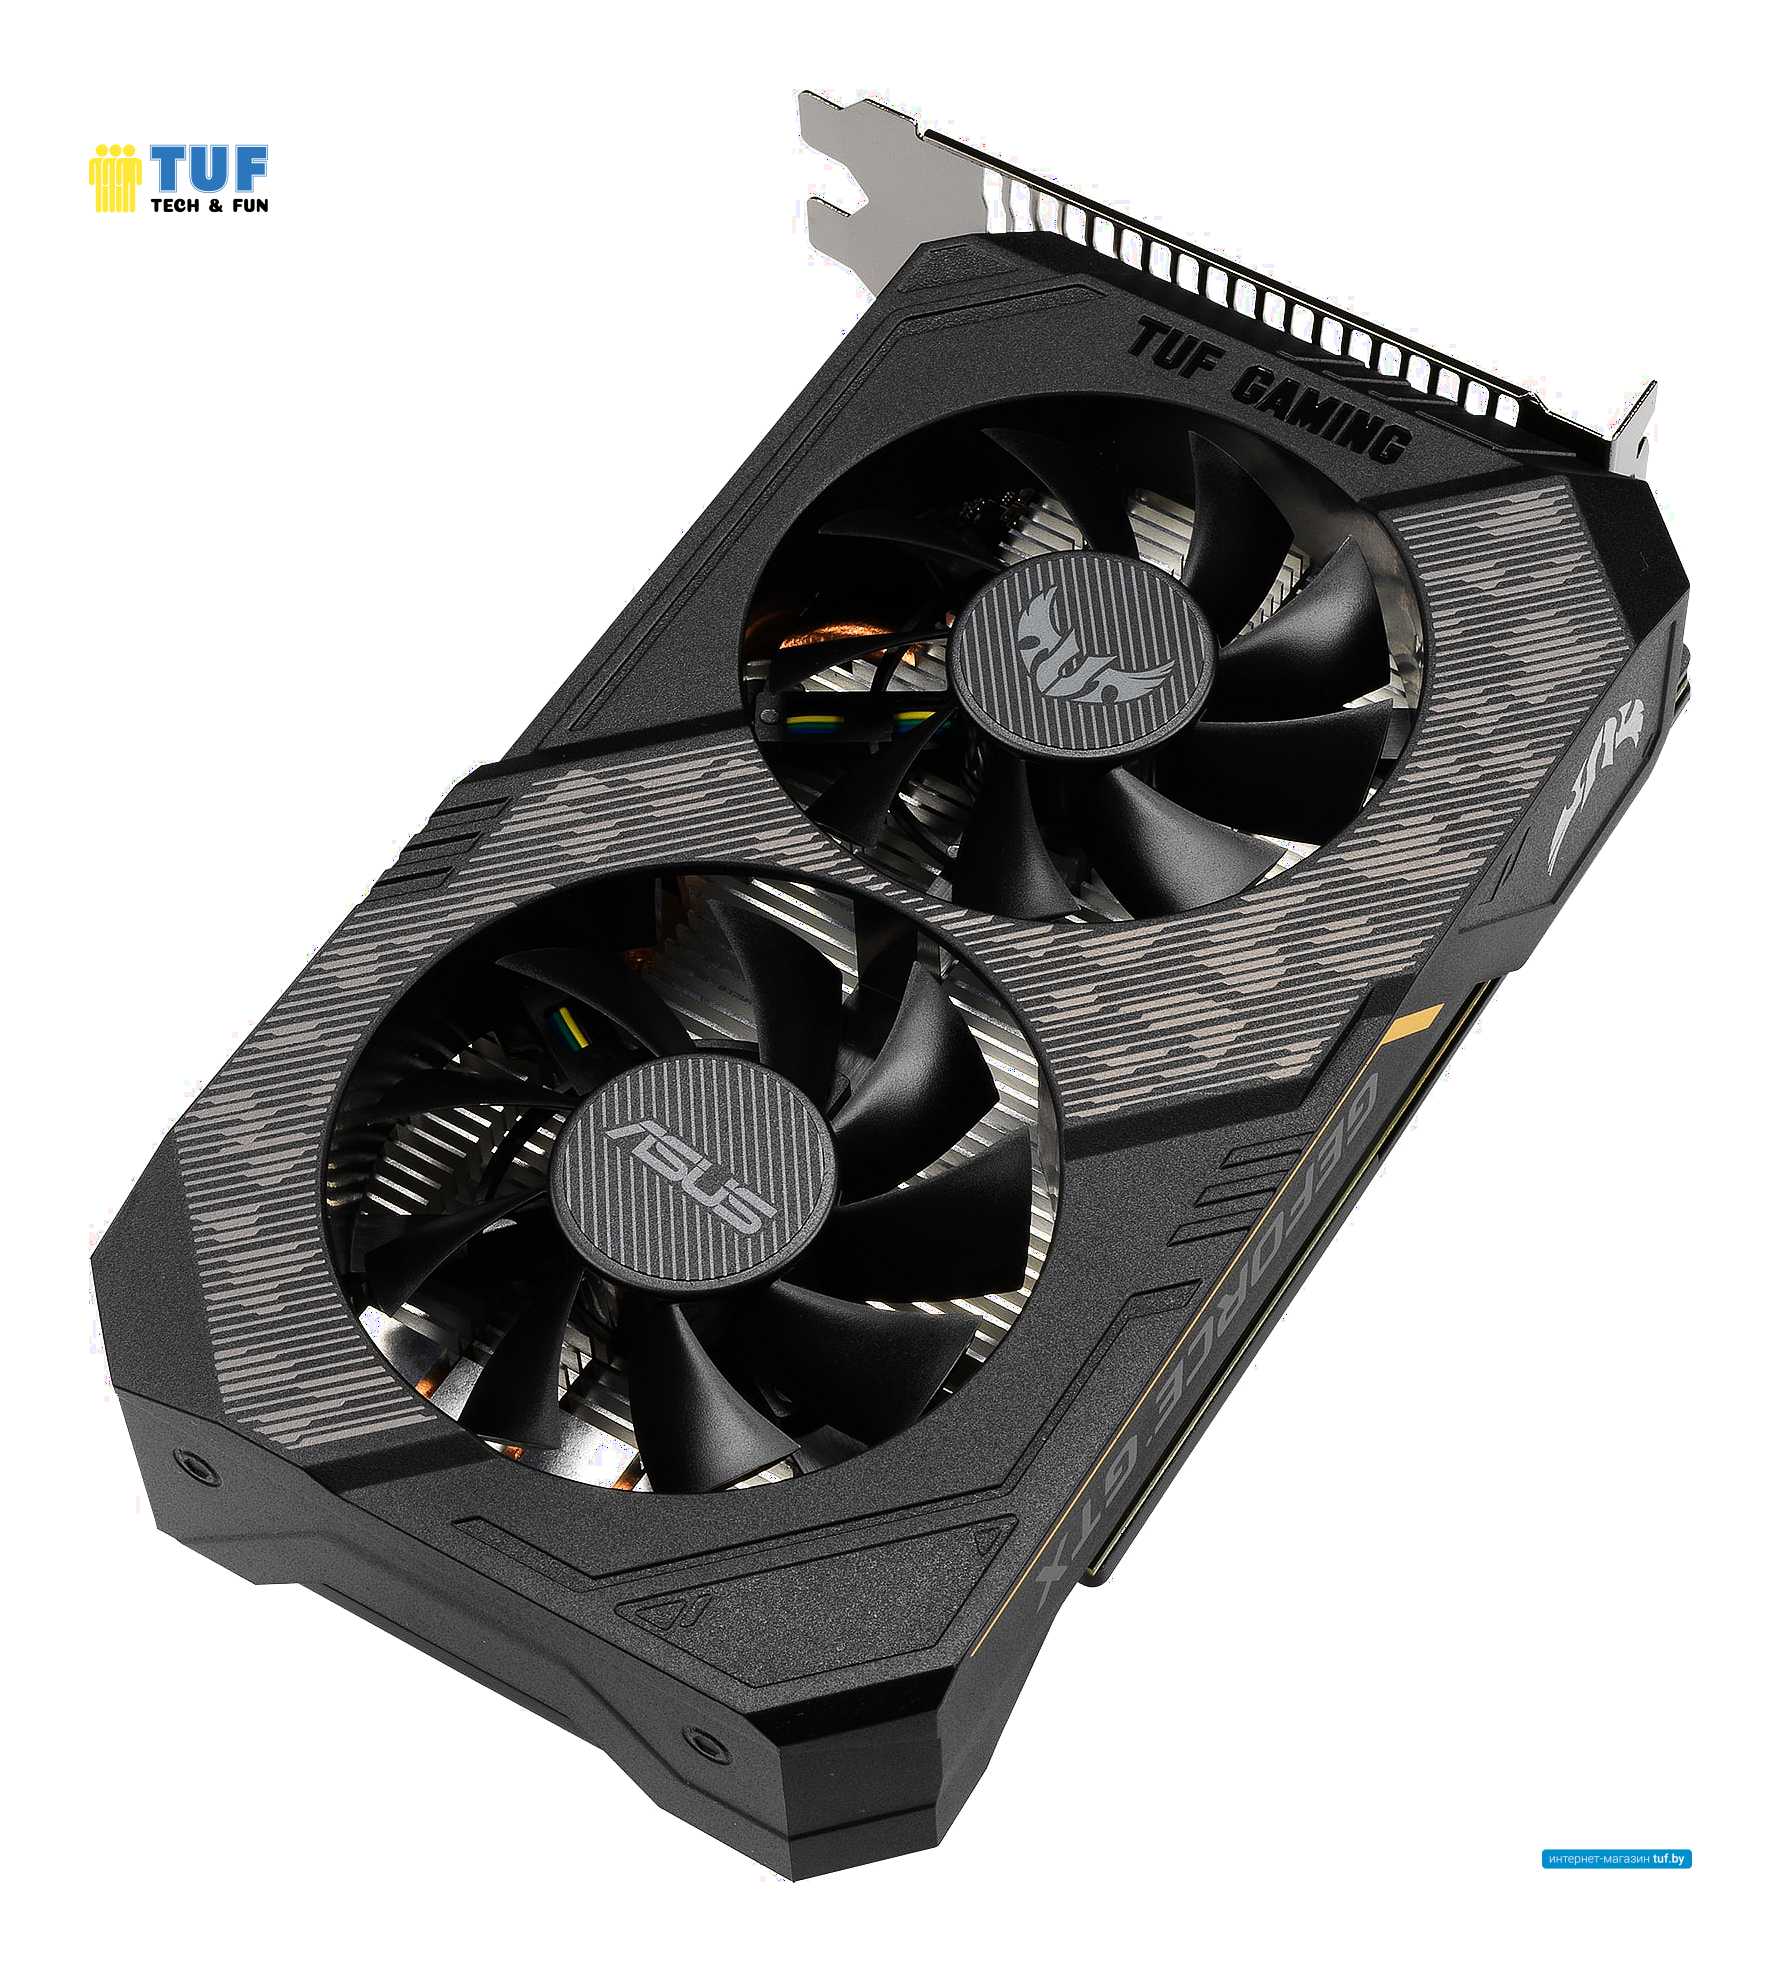 Видеокарта ASUS TUF Gaming GeForce GTX 1650 Super OC 4GB TUF-GTX1650S-O4G-GAMING